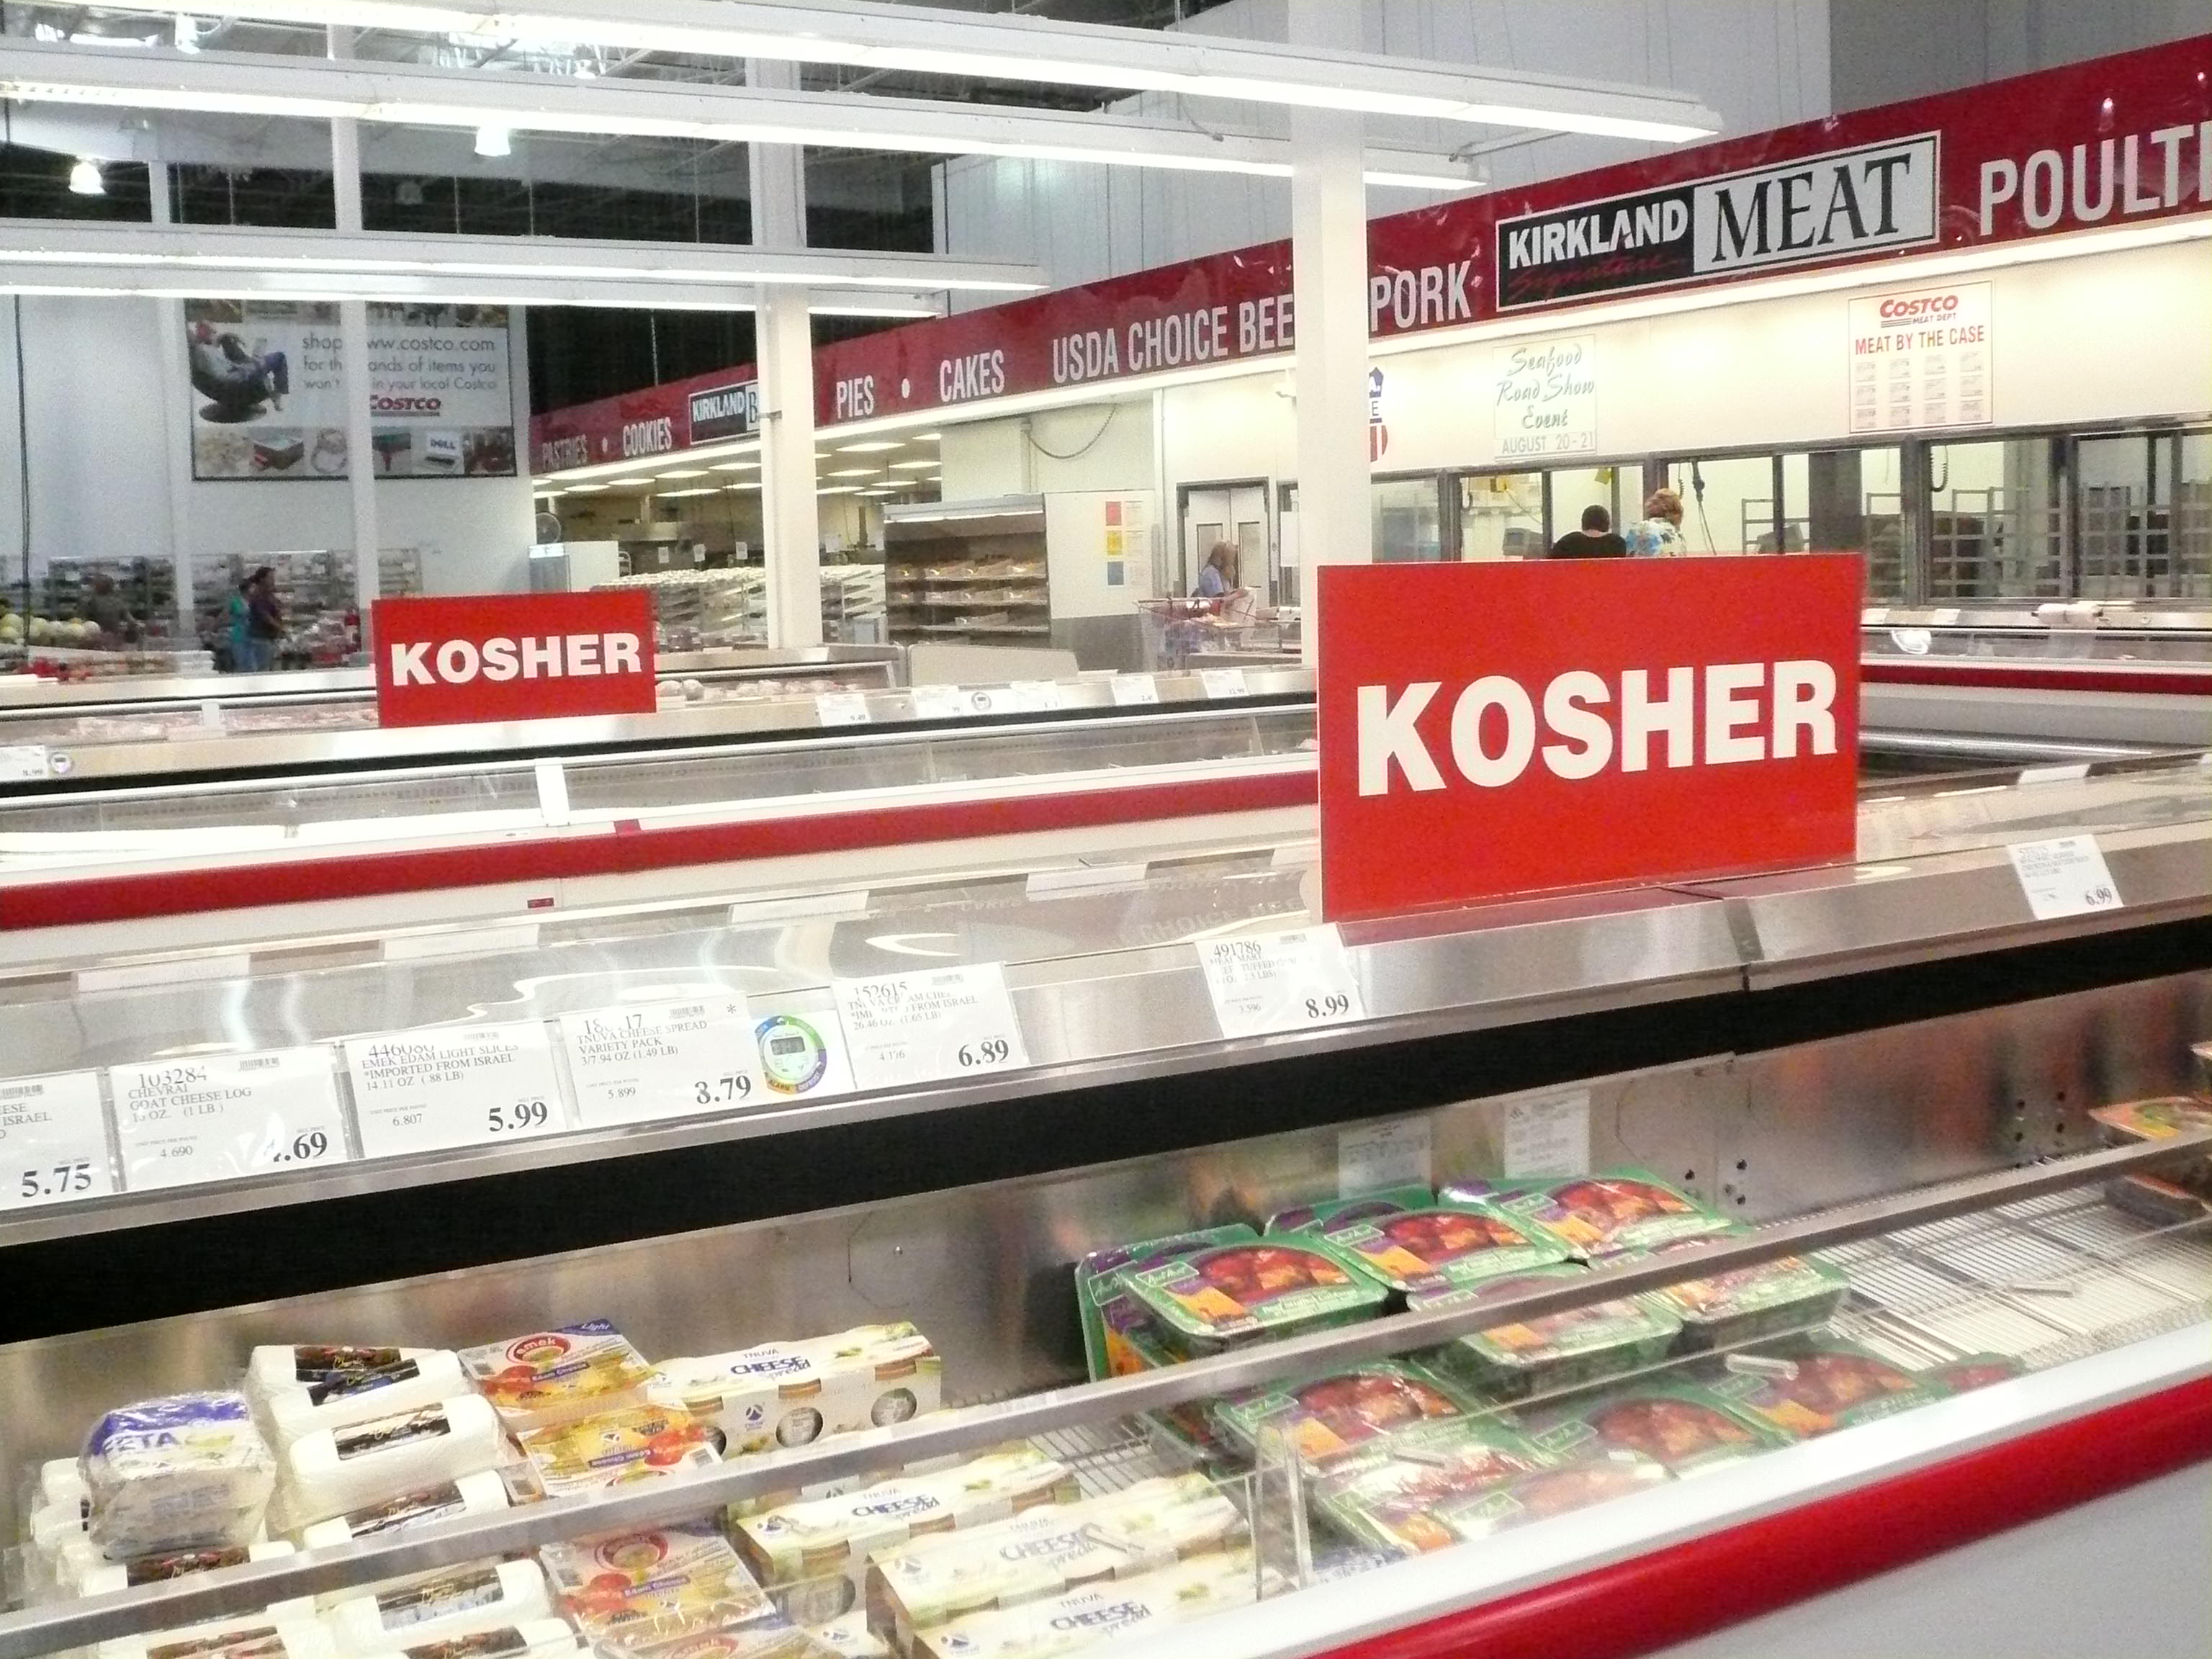 Is Halal the same as kosher?